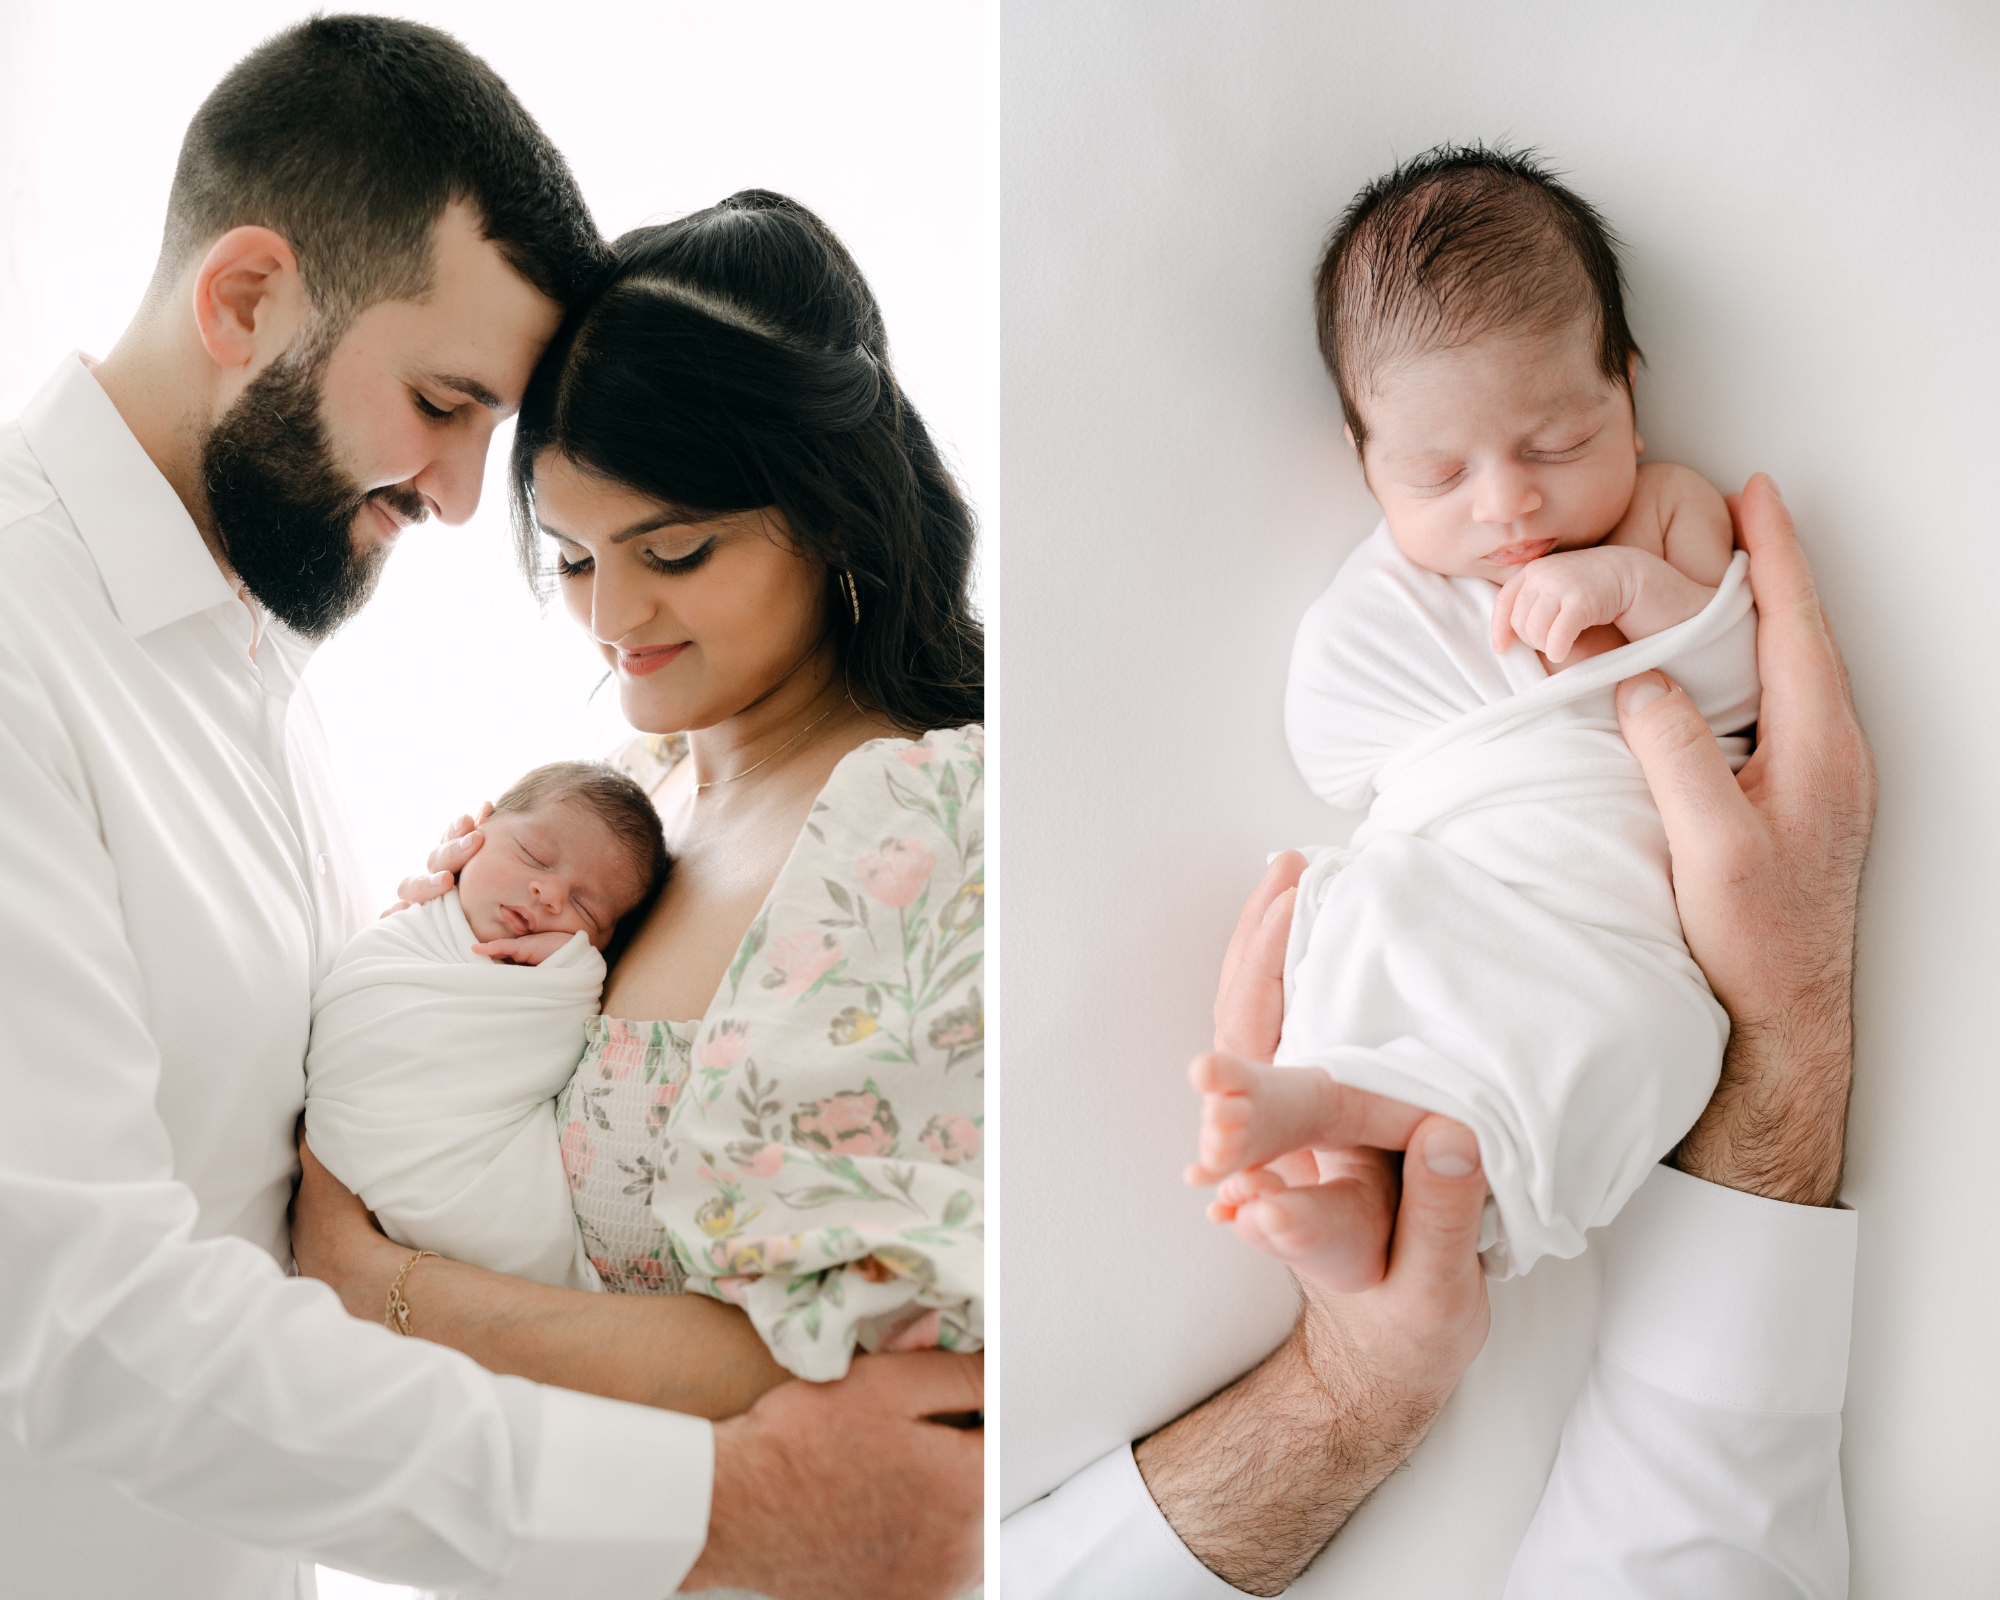 White, clean, simple Miami newborn photoshoot